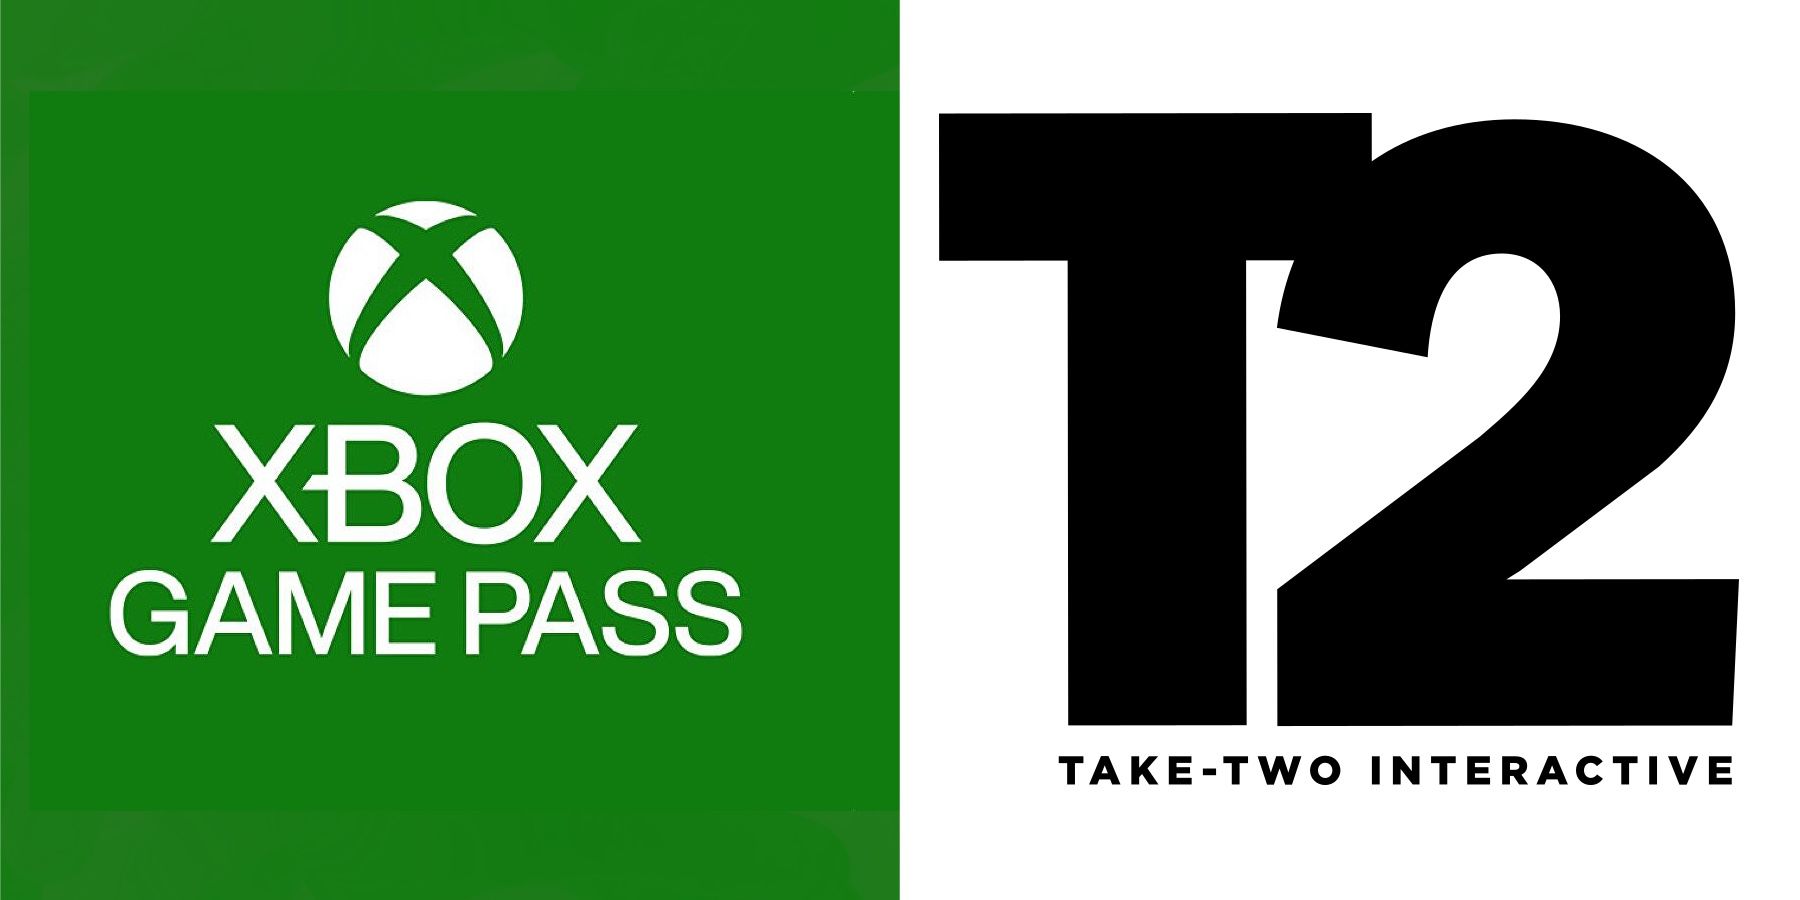 Xbox Game Pass Take-Two Interactive logos